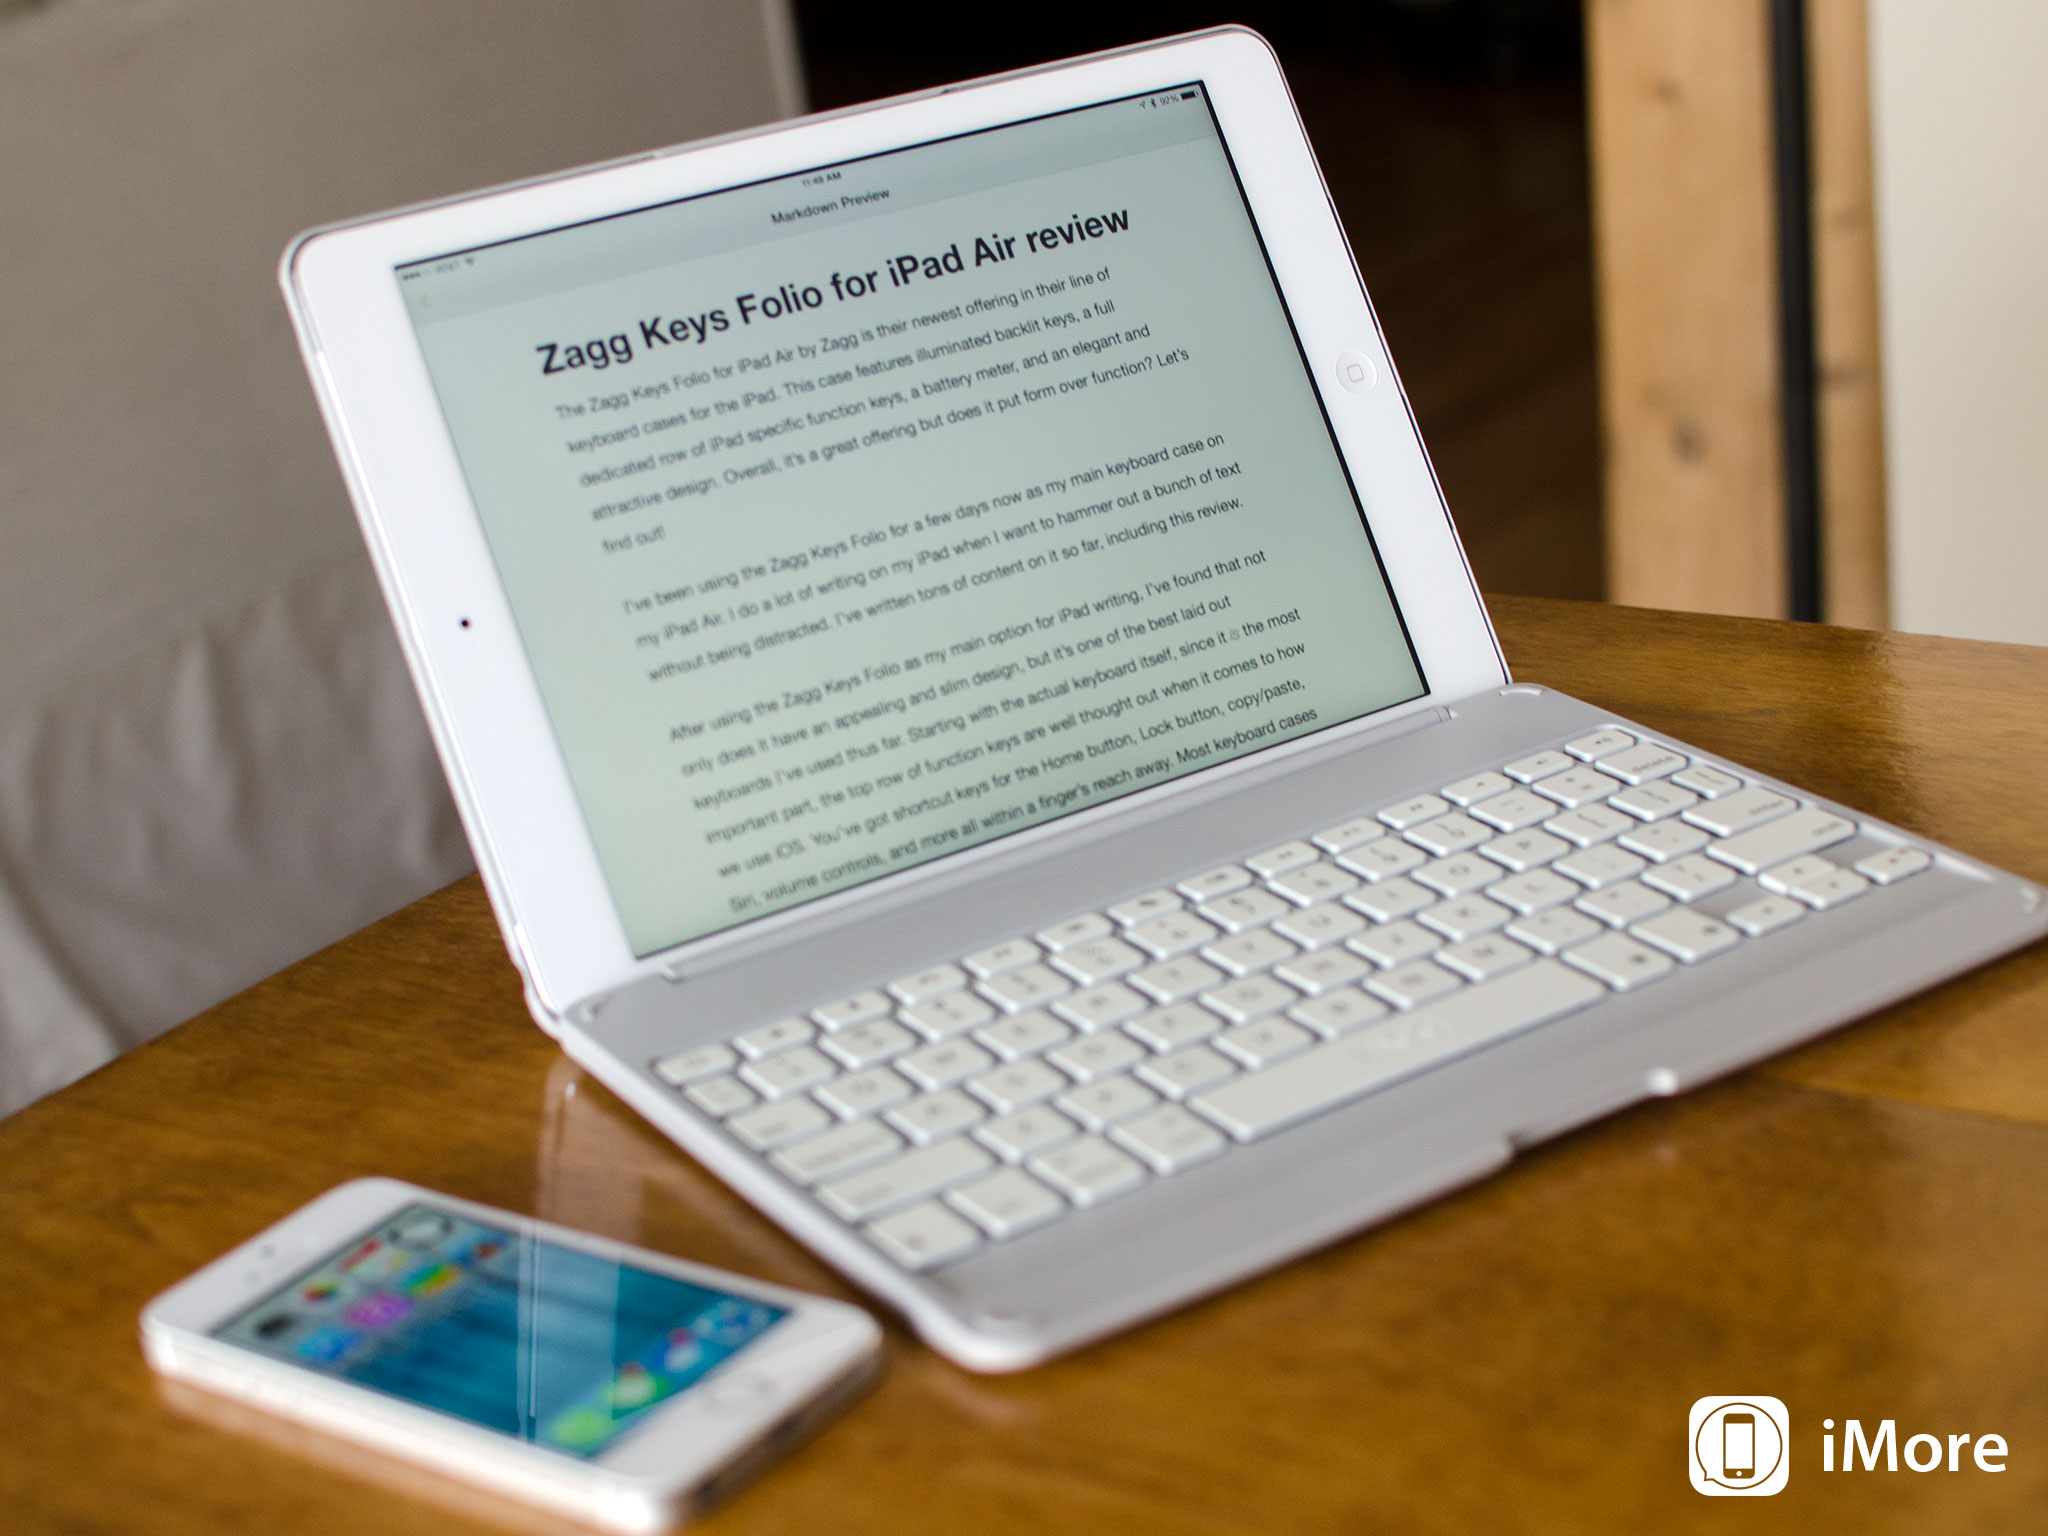 Zagg Keys Folio for iPad Air review